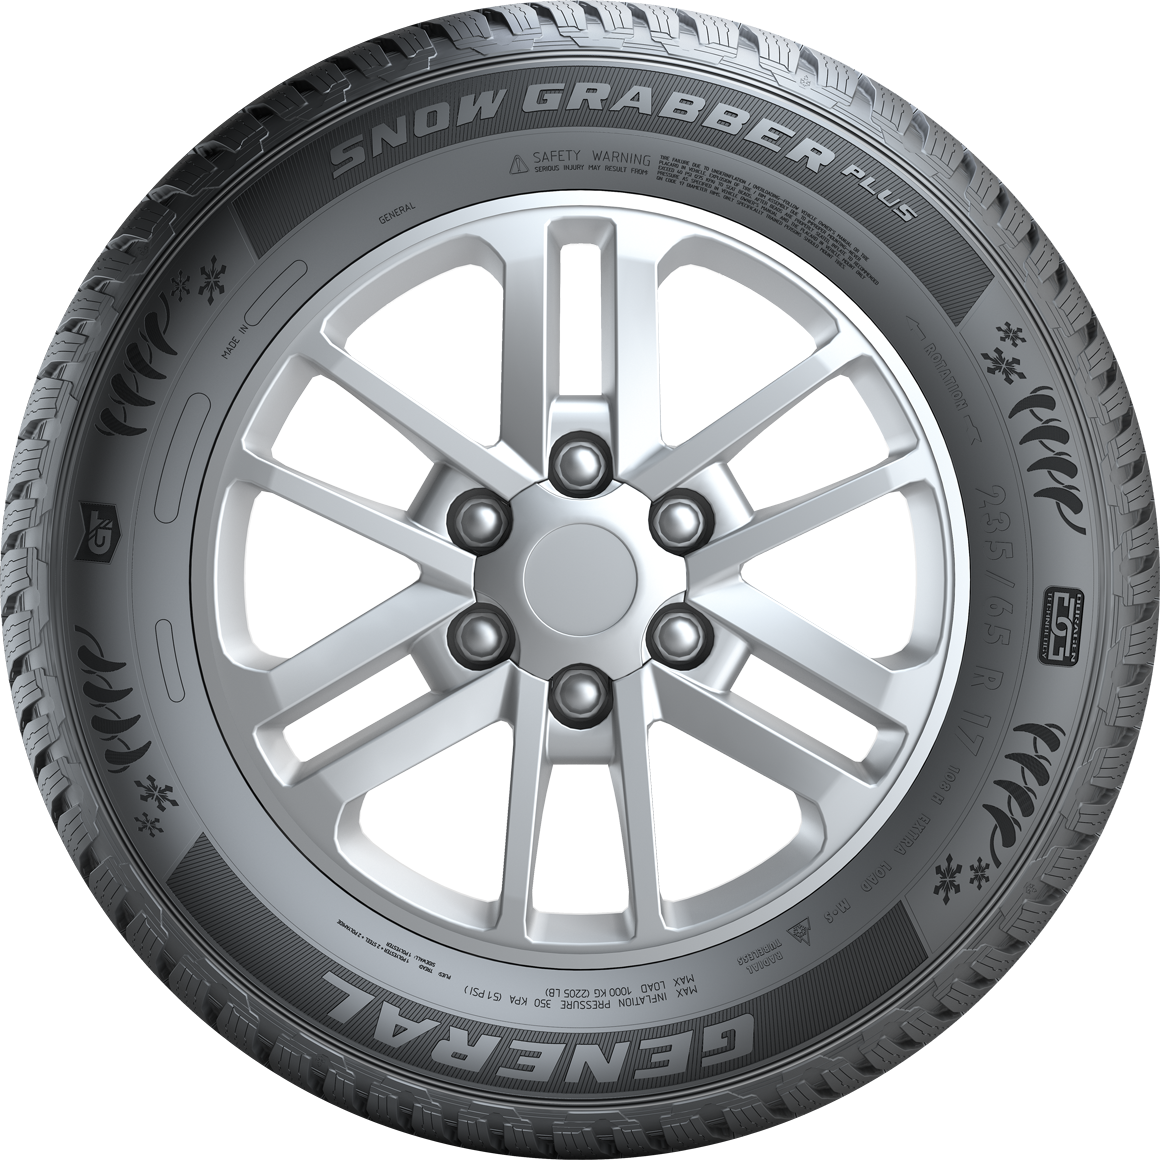 General Tire Snow Grabber Plus 225/60R17 103H XL - KolayOto